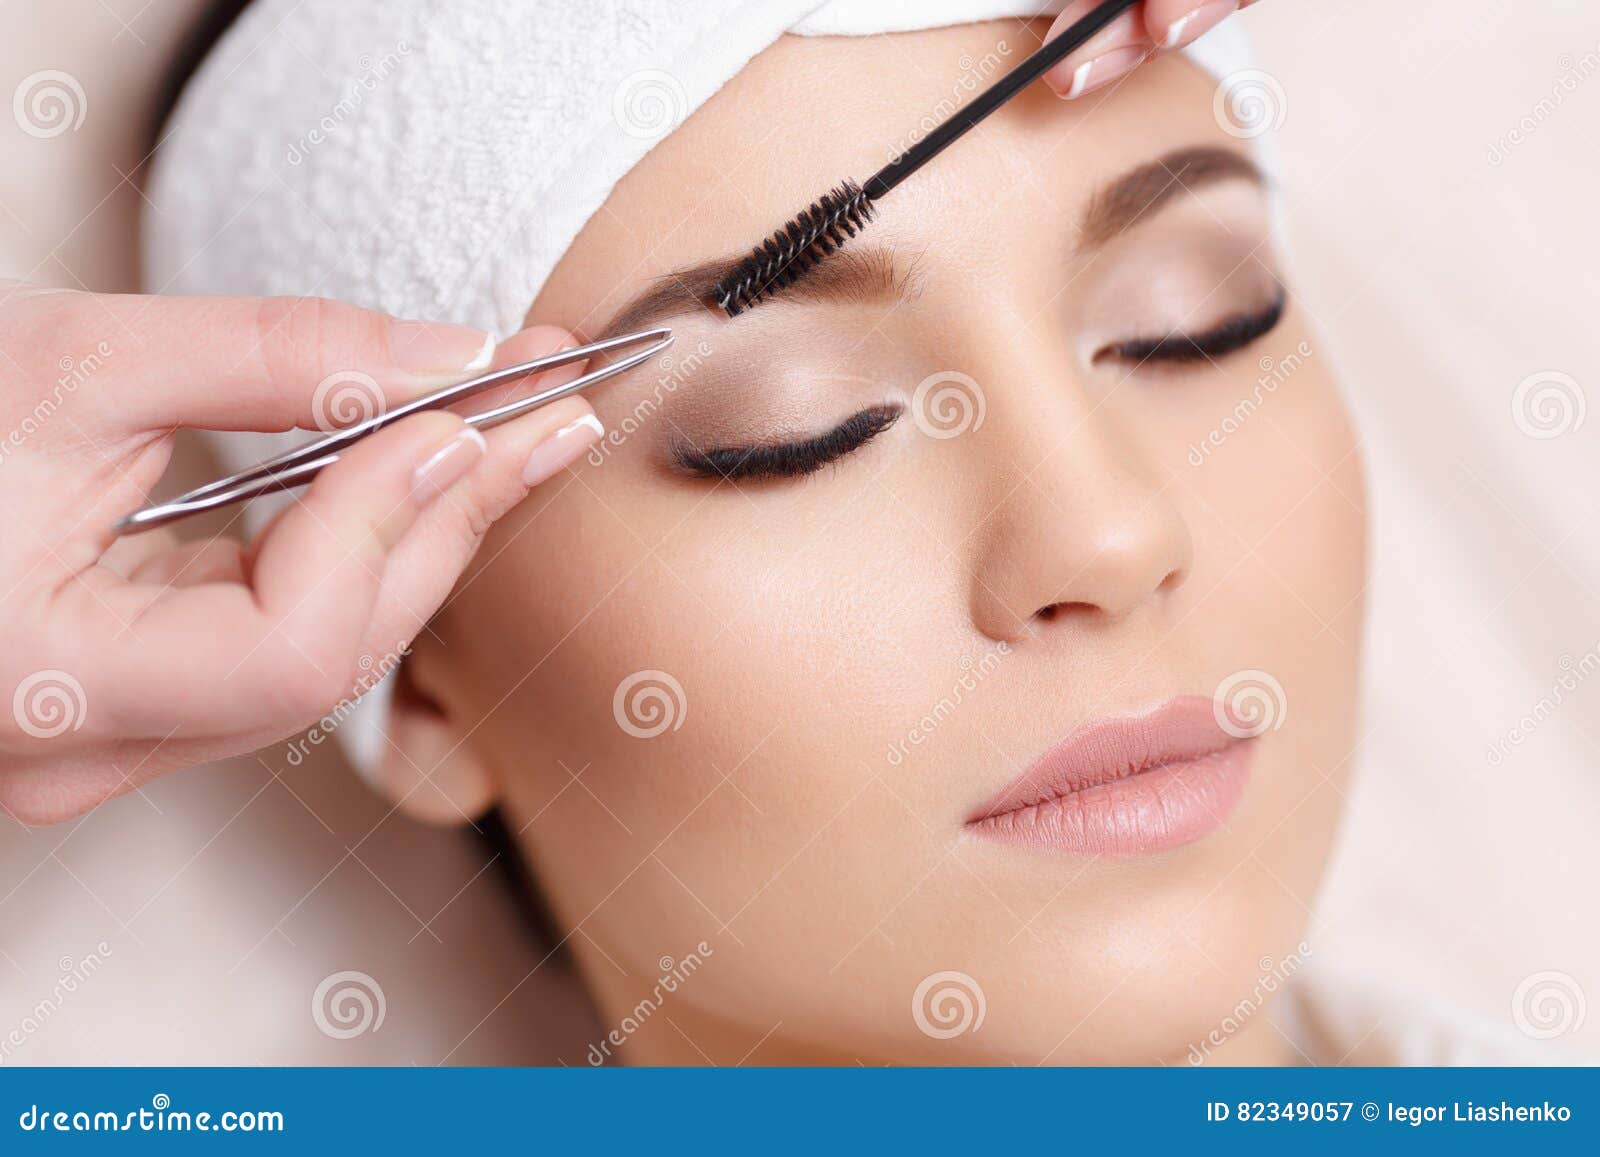 beautiful young woman gets eyebrow correction procedure